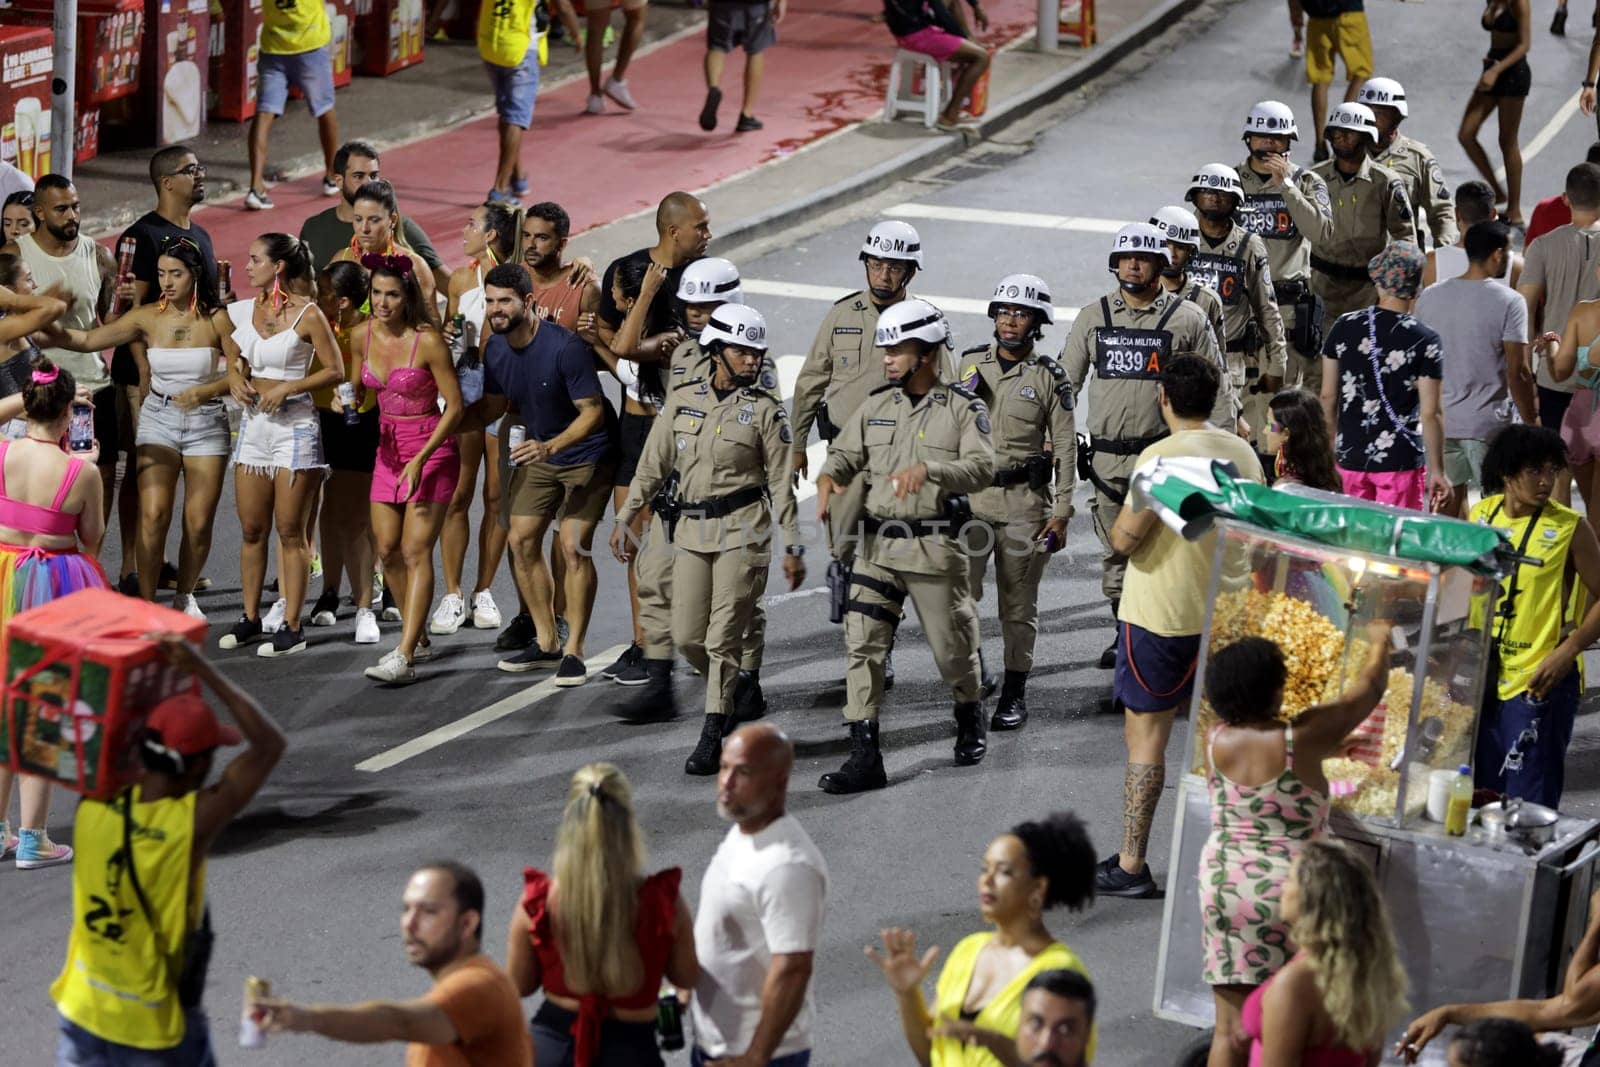 Bahia military police at carnival by joasouza